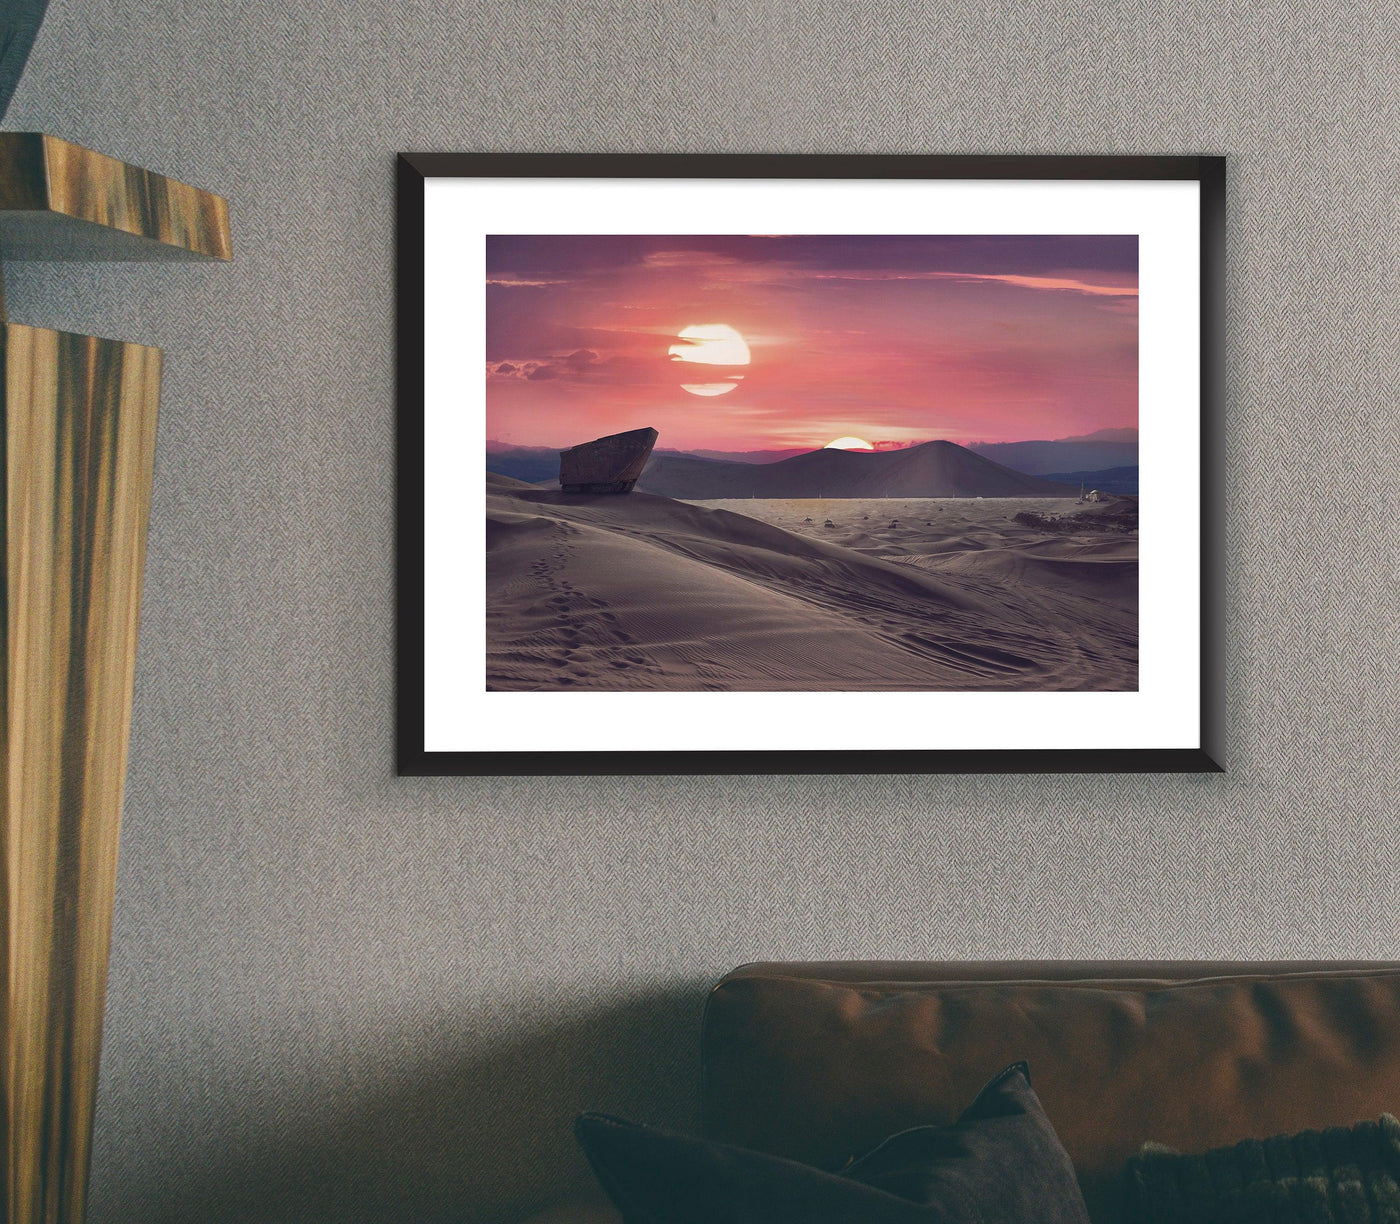 Tatooine Desert Planet Star Wars Art Print - Gallery 94